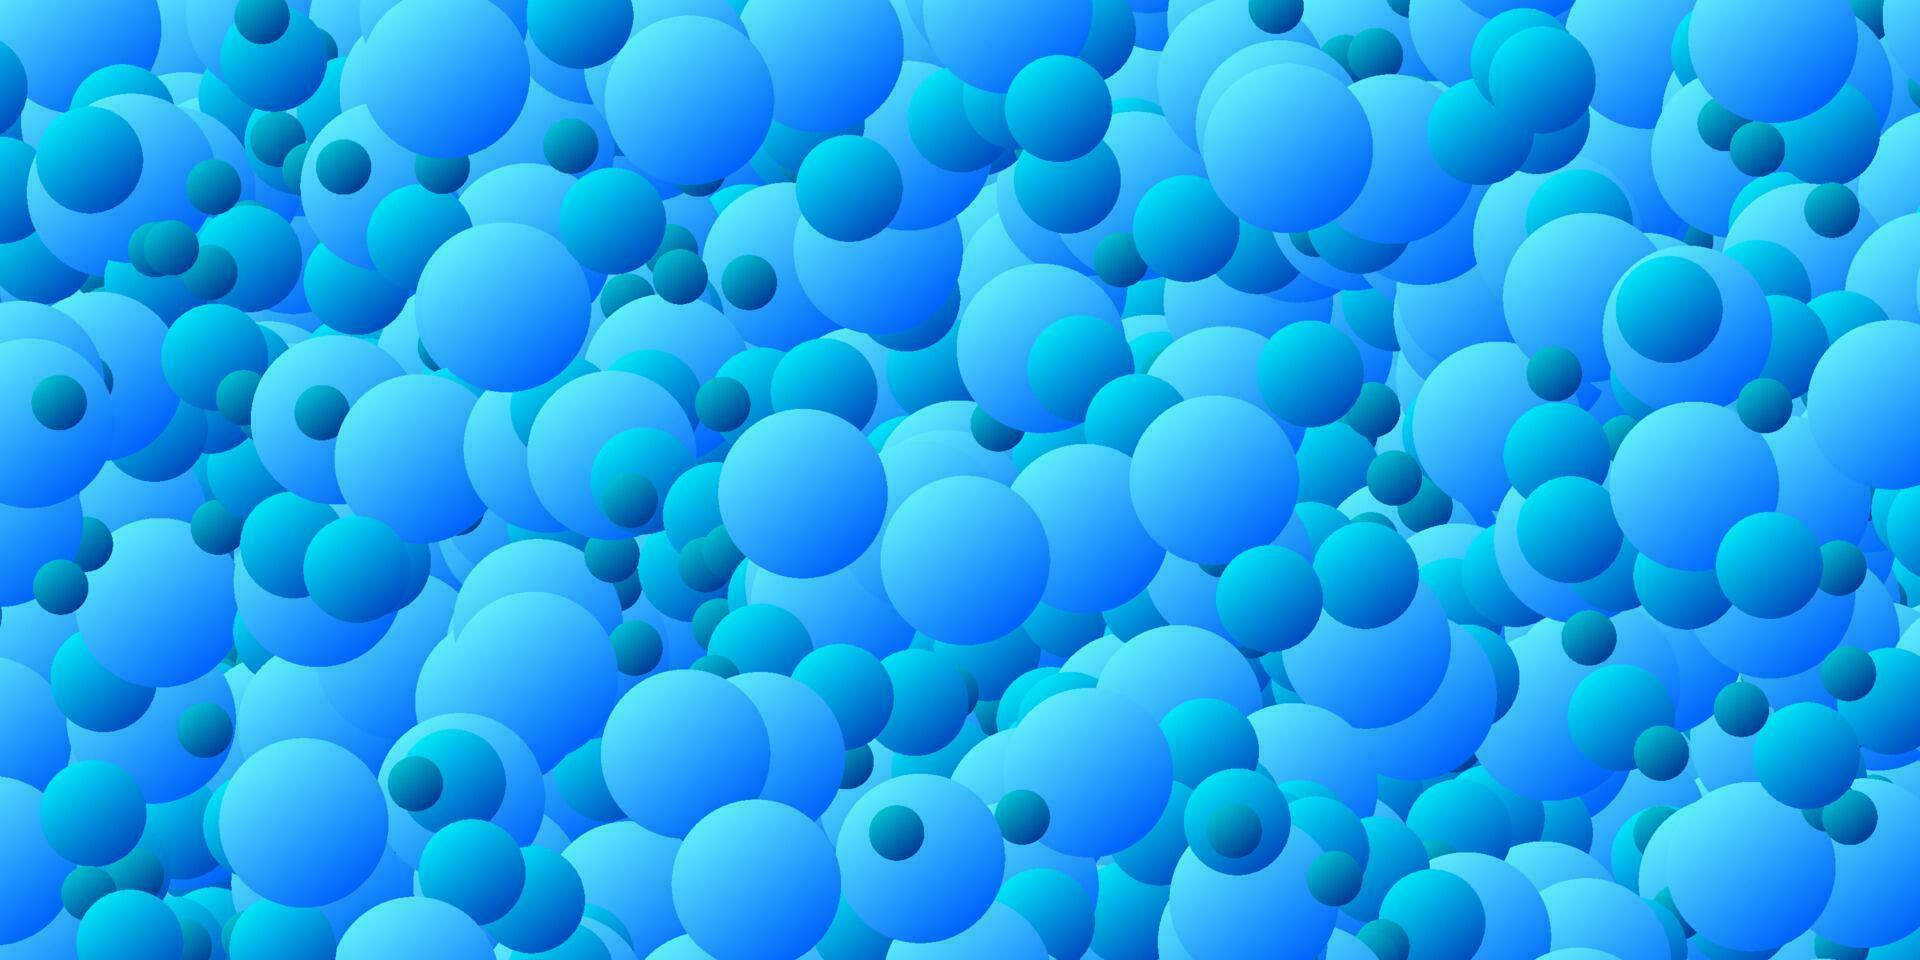 azul círculos en un azul antecedentes vector